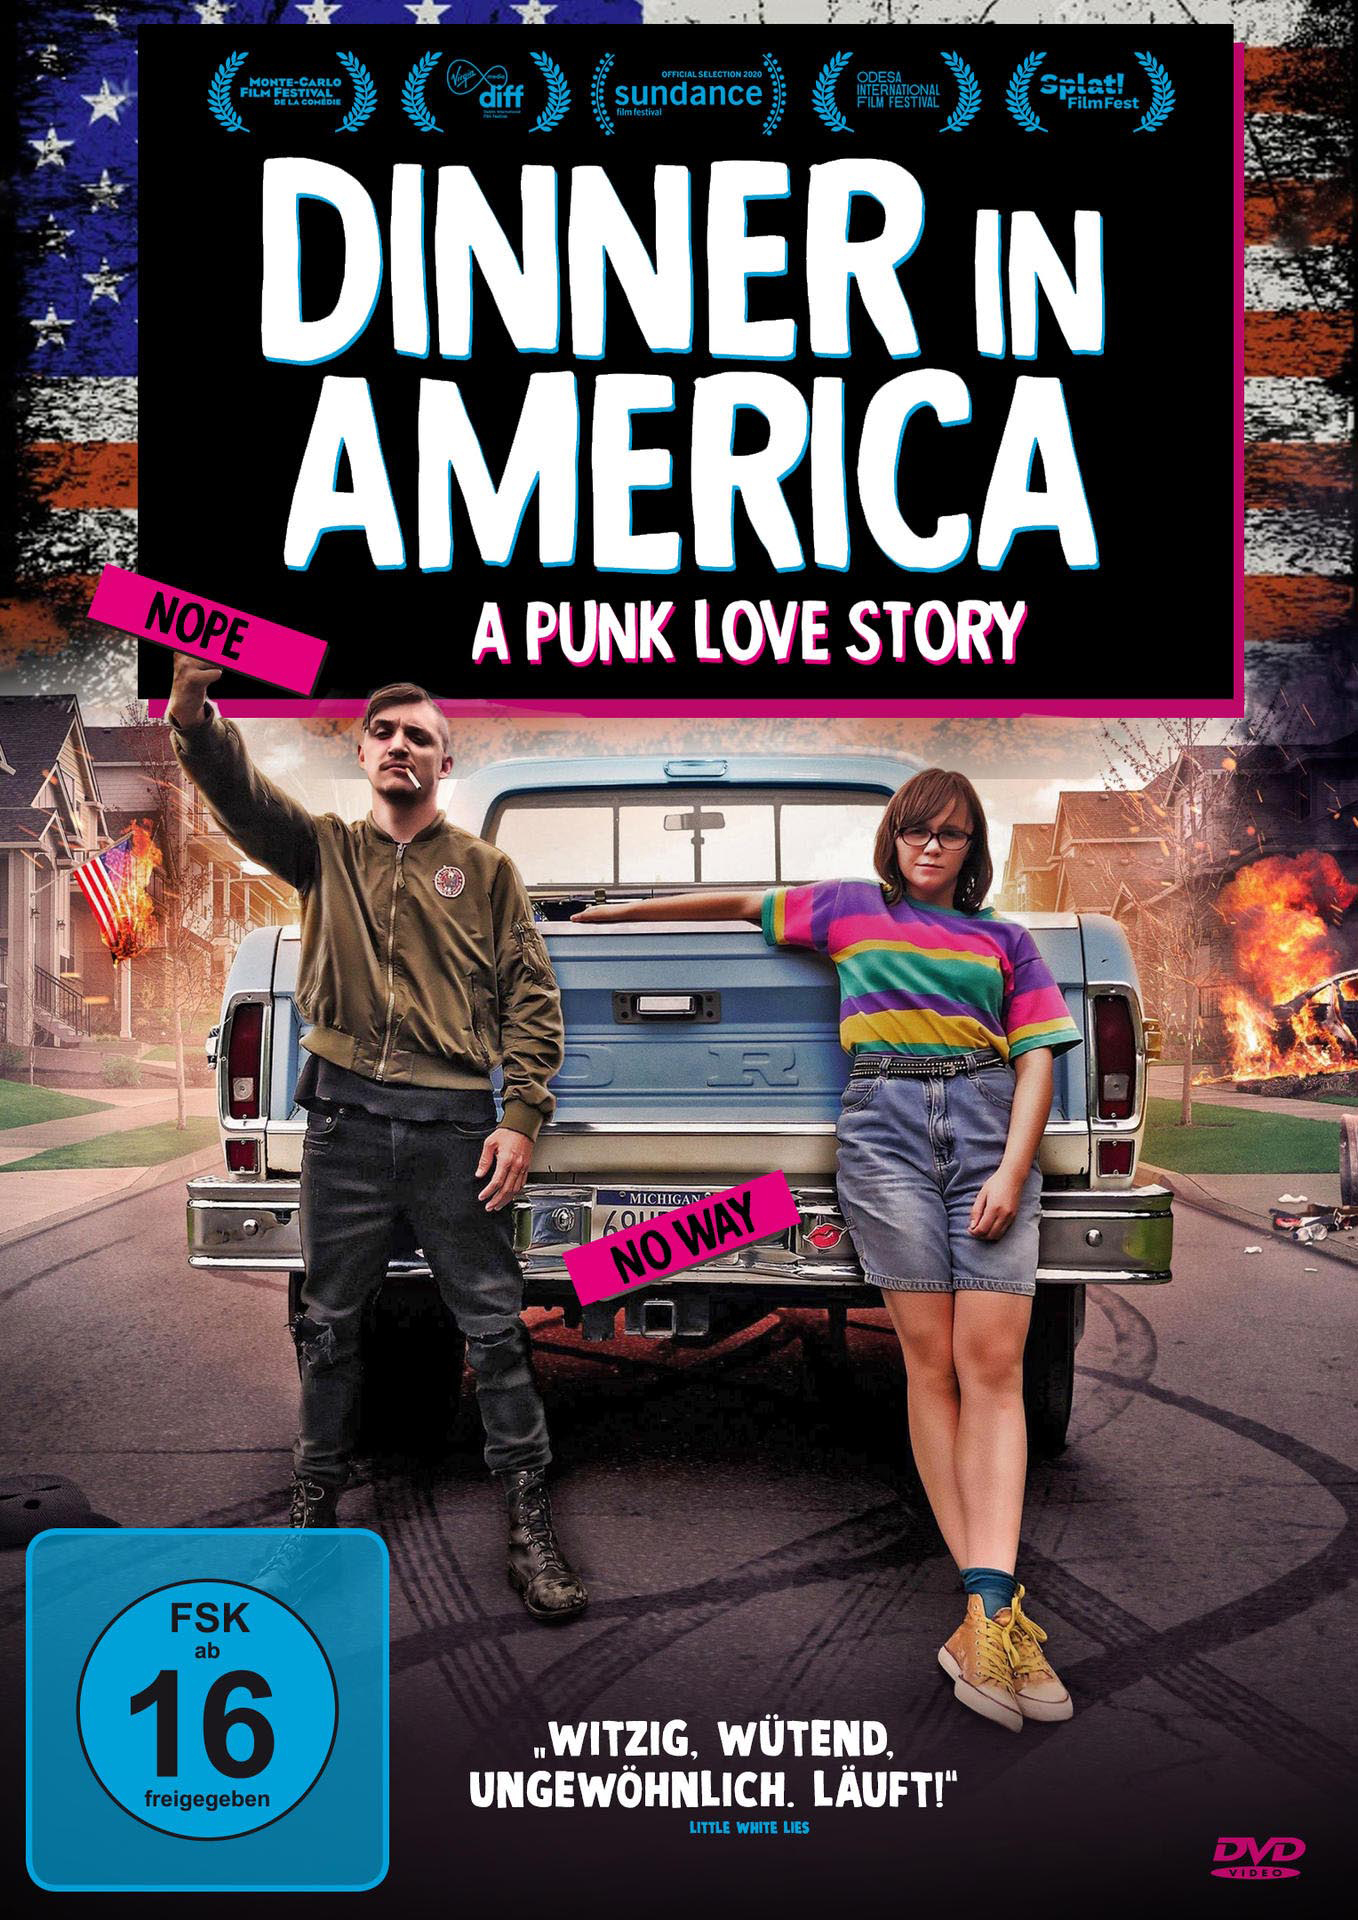 Punk Story in America DVD Love Dinner A -